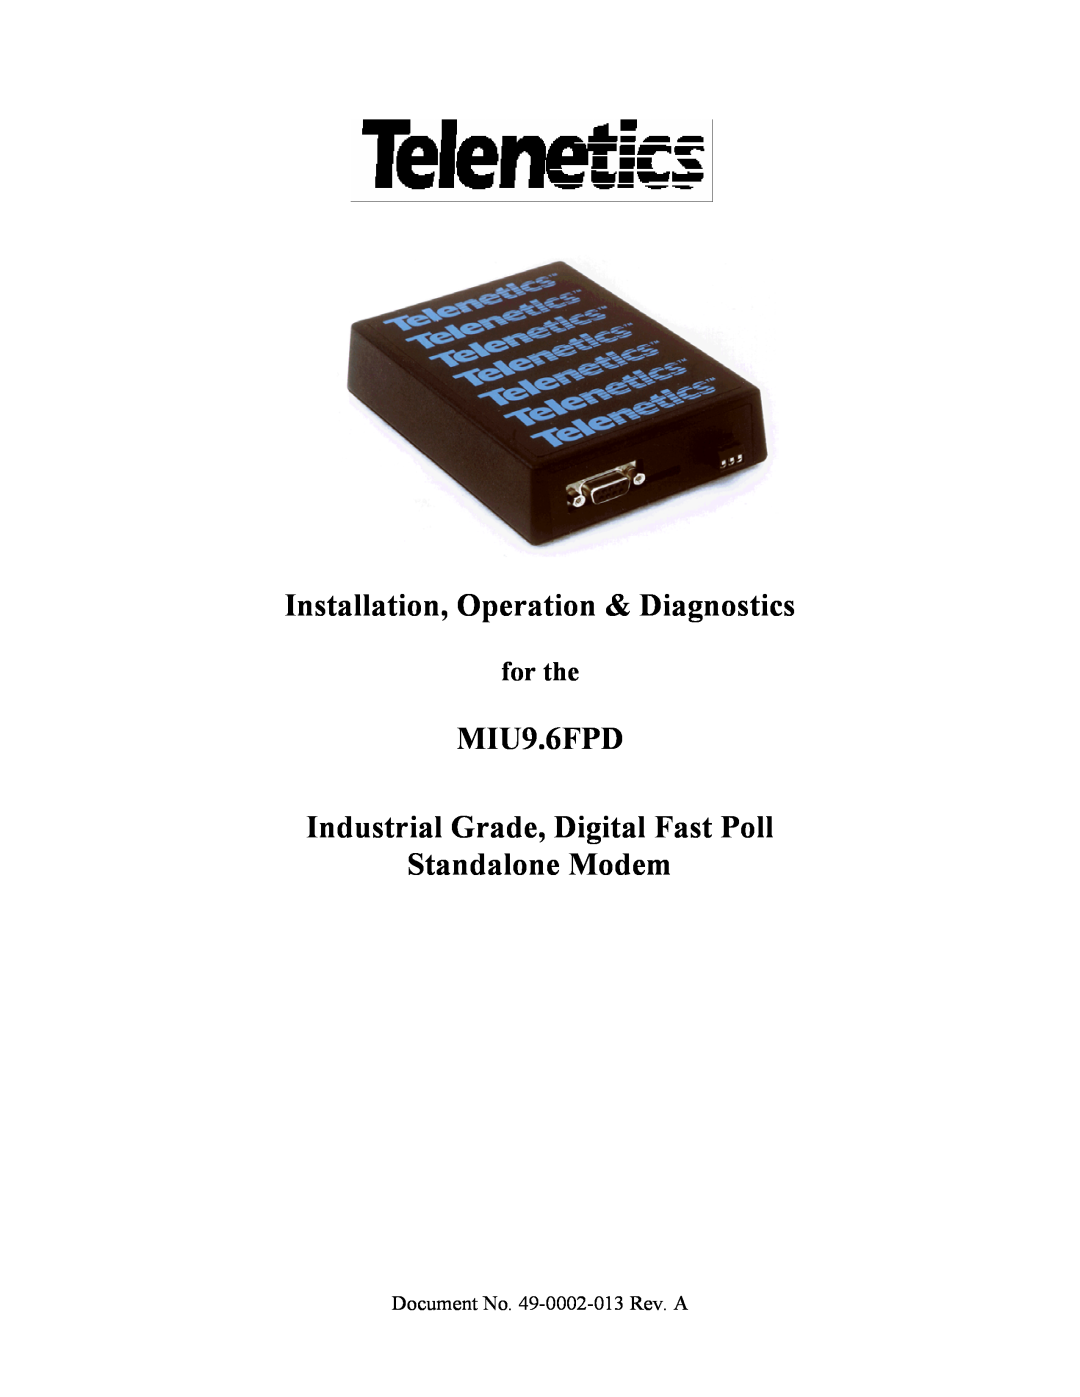 Telenetics MIU9.6FPD manual for the, Installation, Operation & Diagnostics, Document No. 49-0002-013 Rev. A 